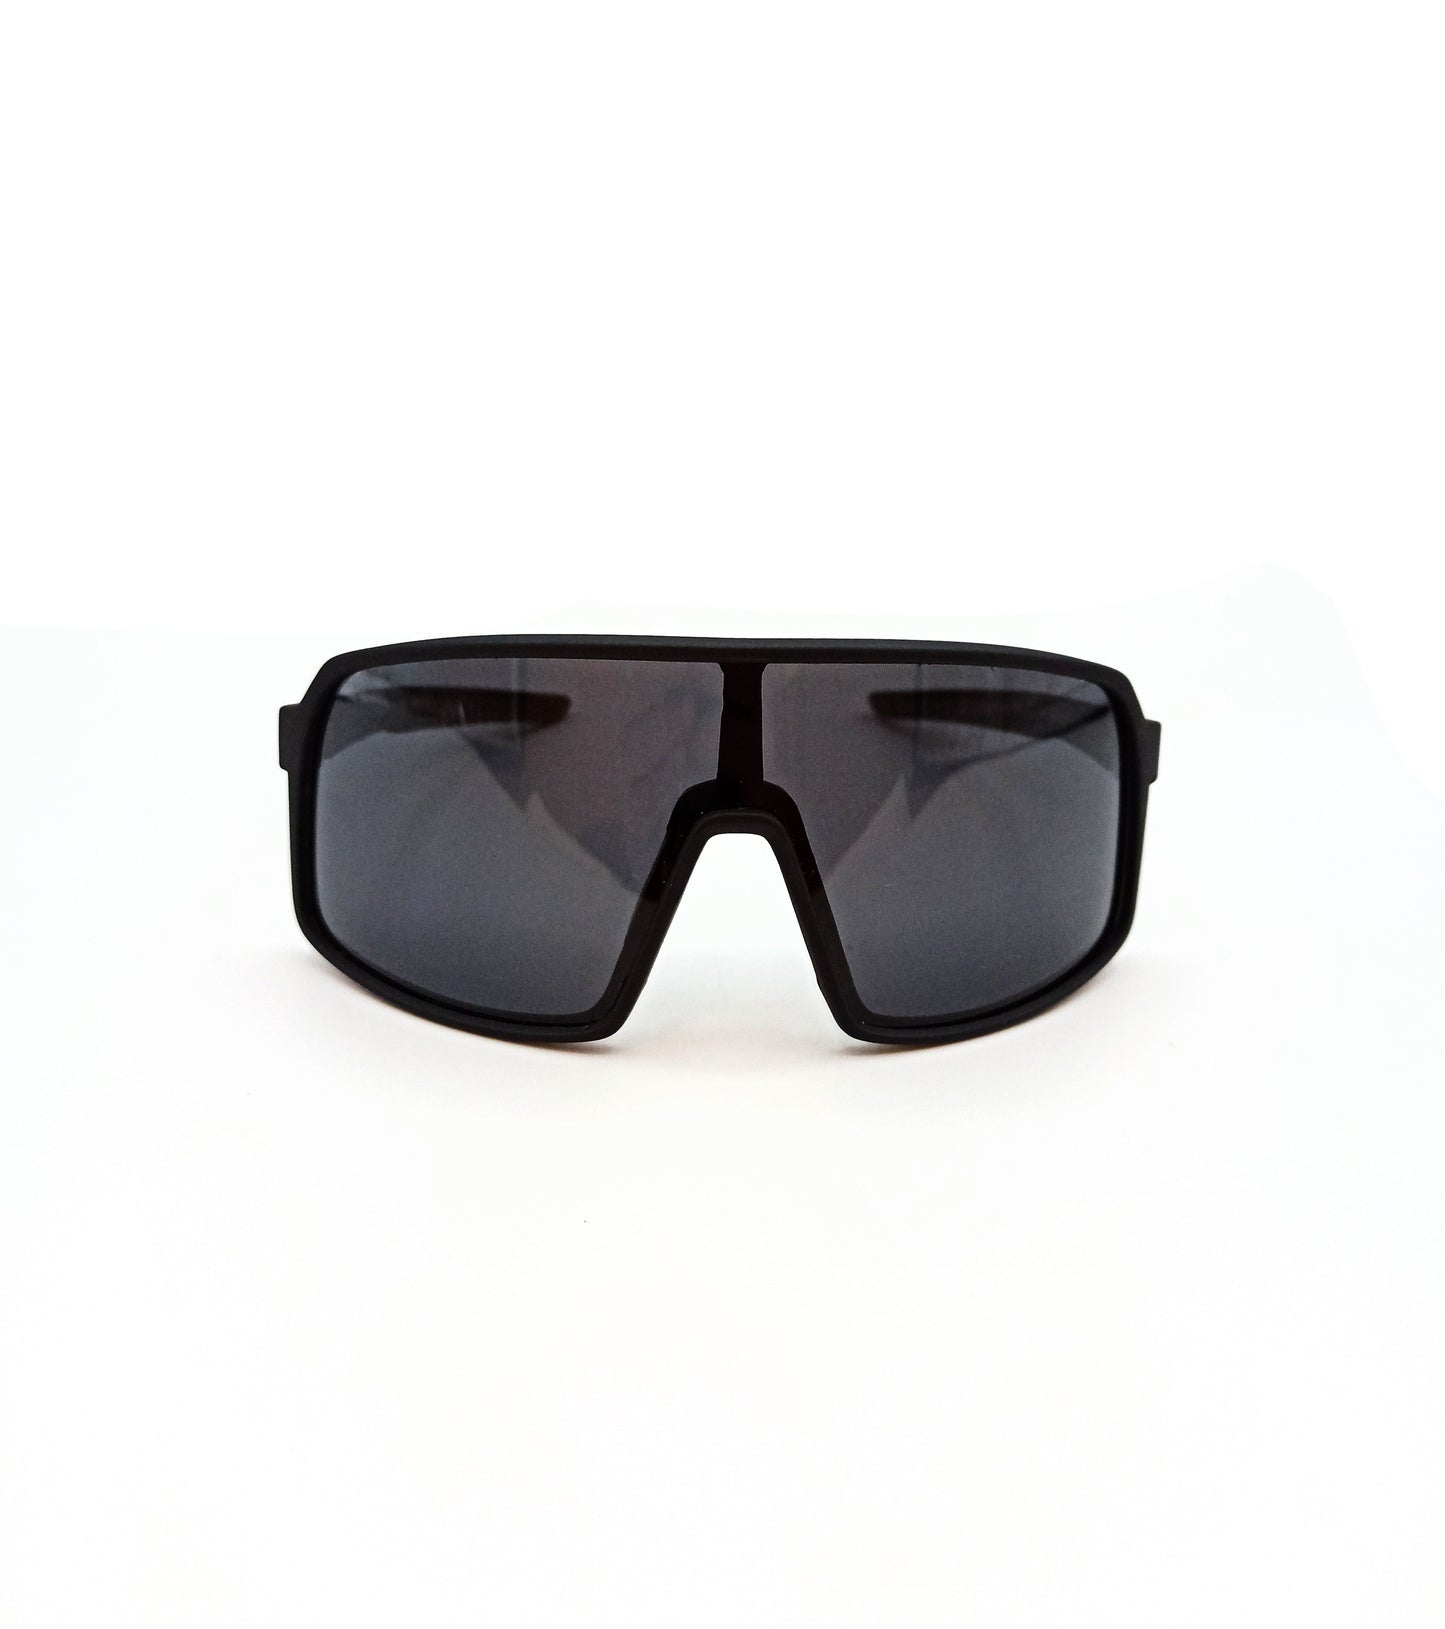 Qoolst Lambert Polarized Sunglasses for Men and Women